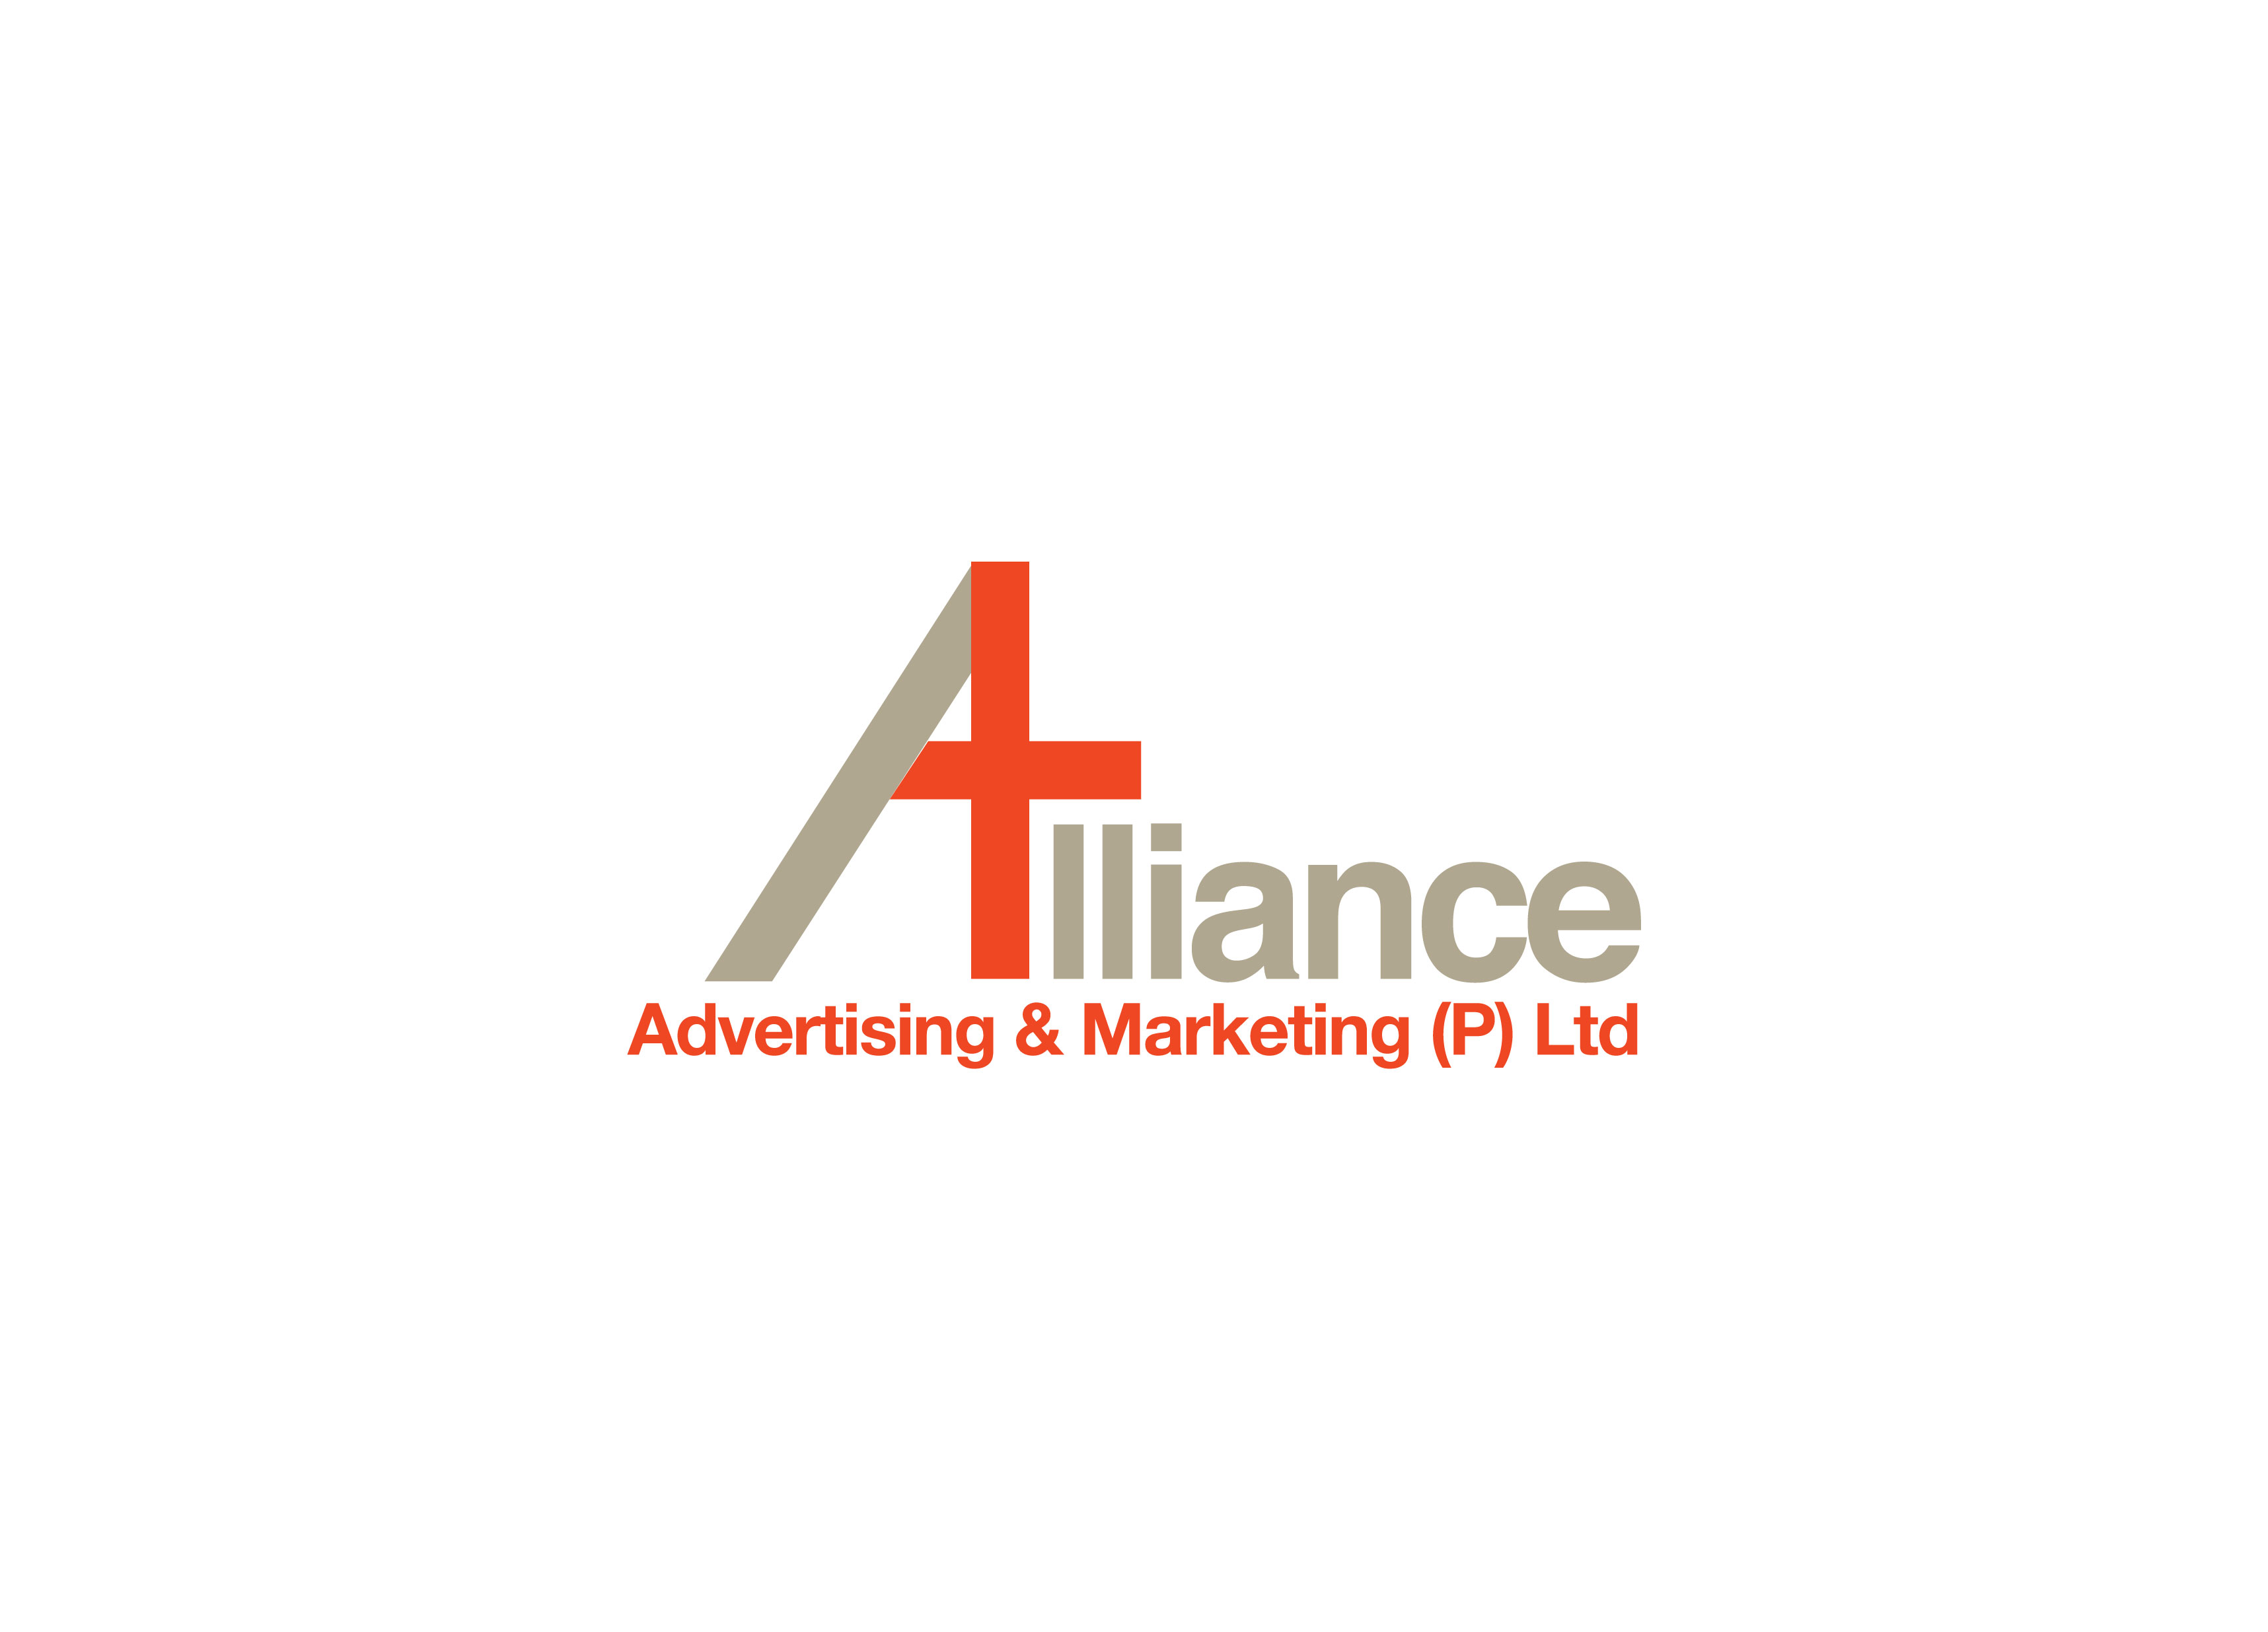 Alliance Advertising & Marketing Pvt Ltd